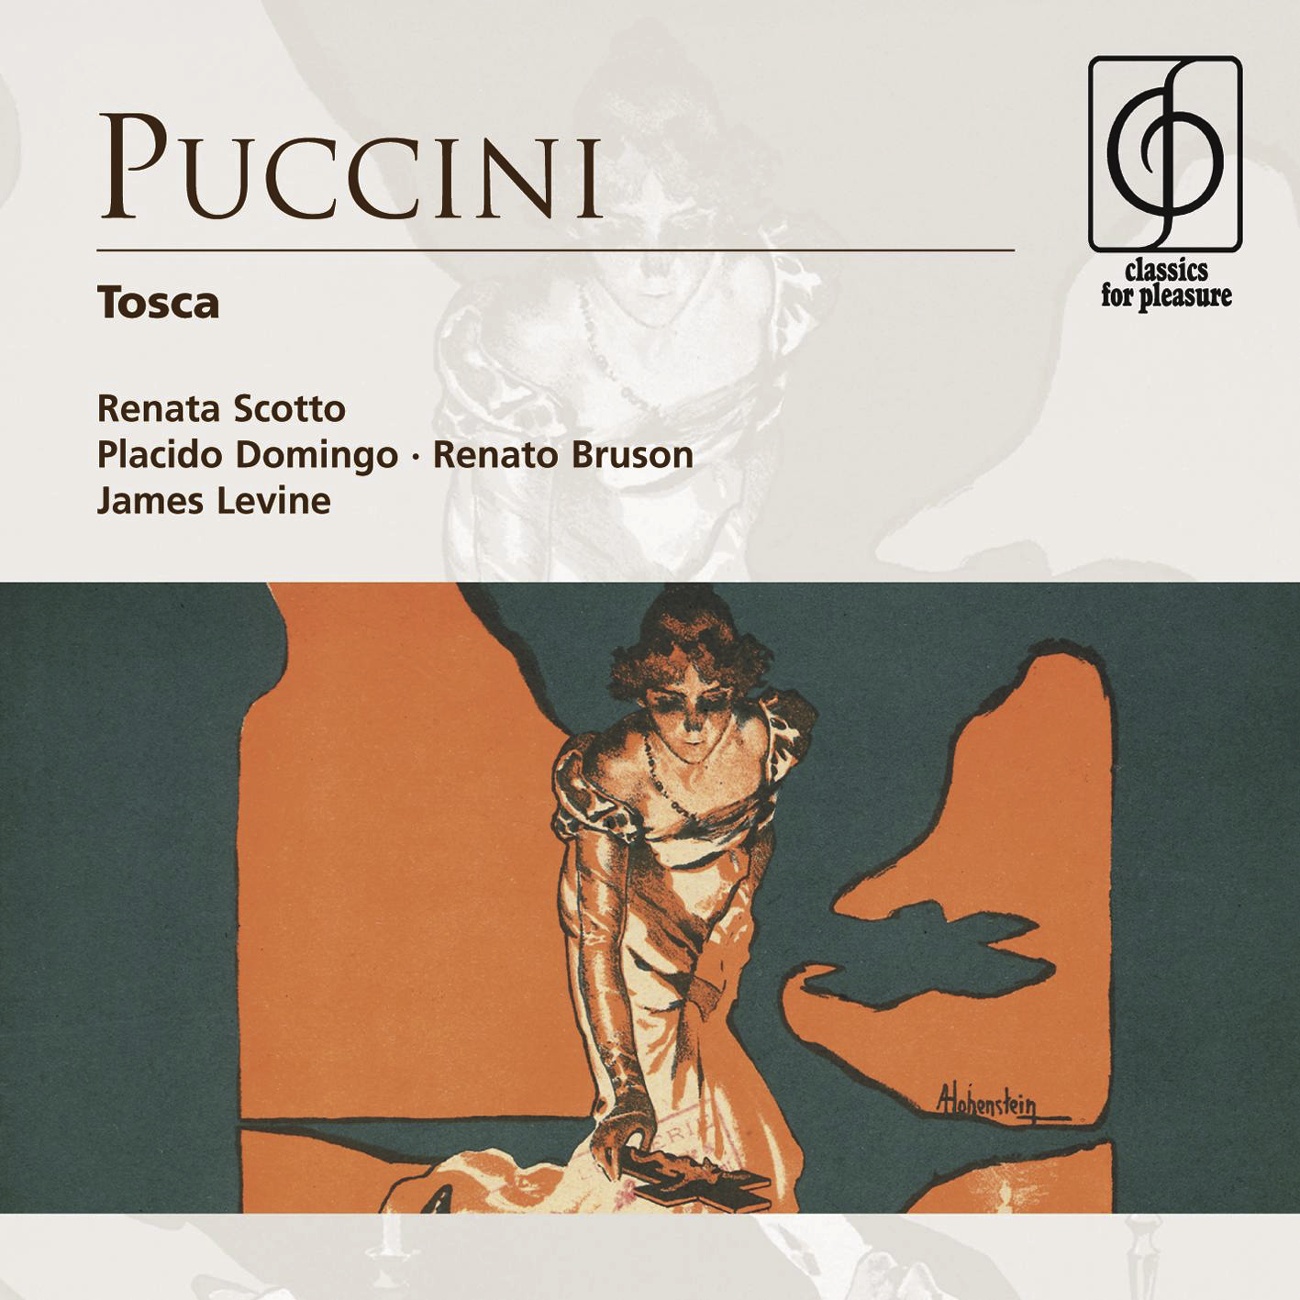 Tosca - Opera in three acts (1997 Digital Remaster), Act II: Floria!....Amore!...Sei tu? (Cavaradossi, Tosca, Scarpia, Sciarrone)